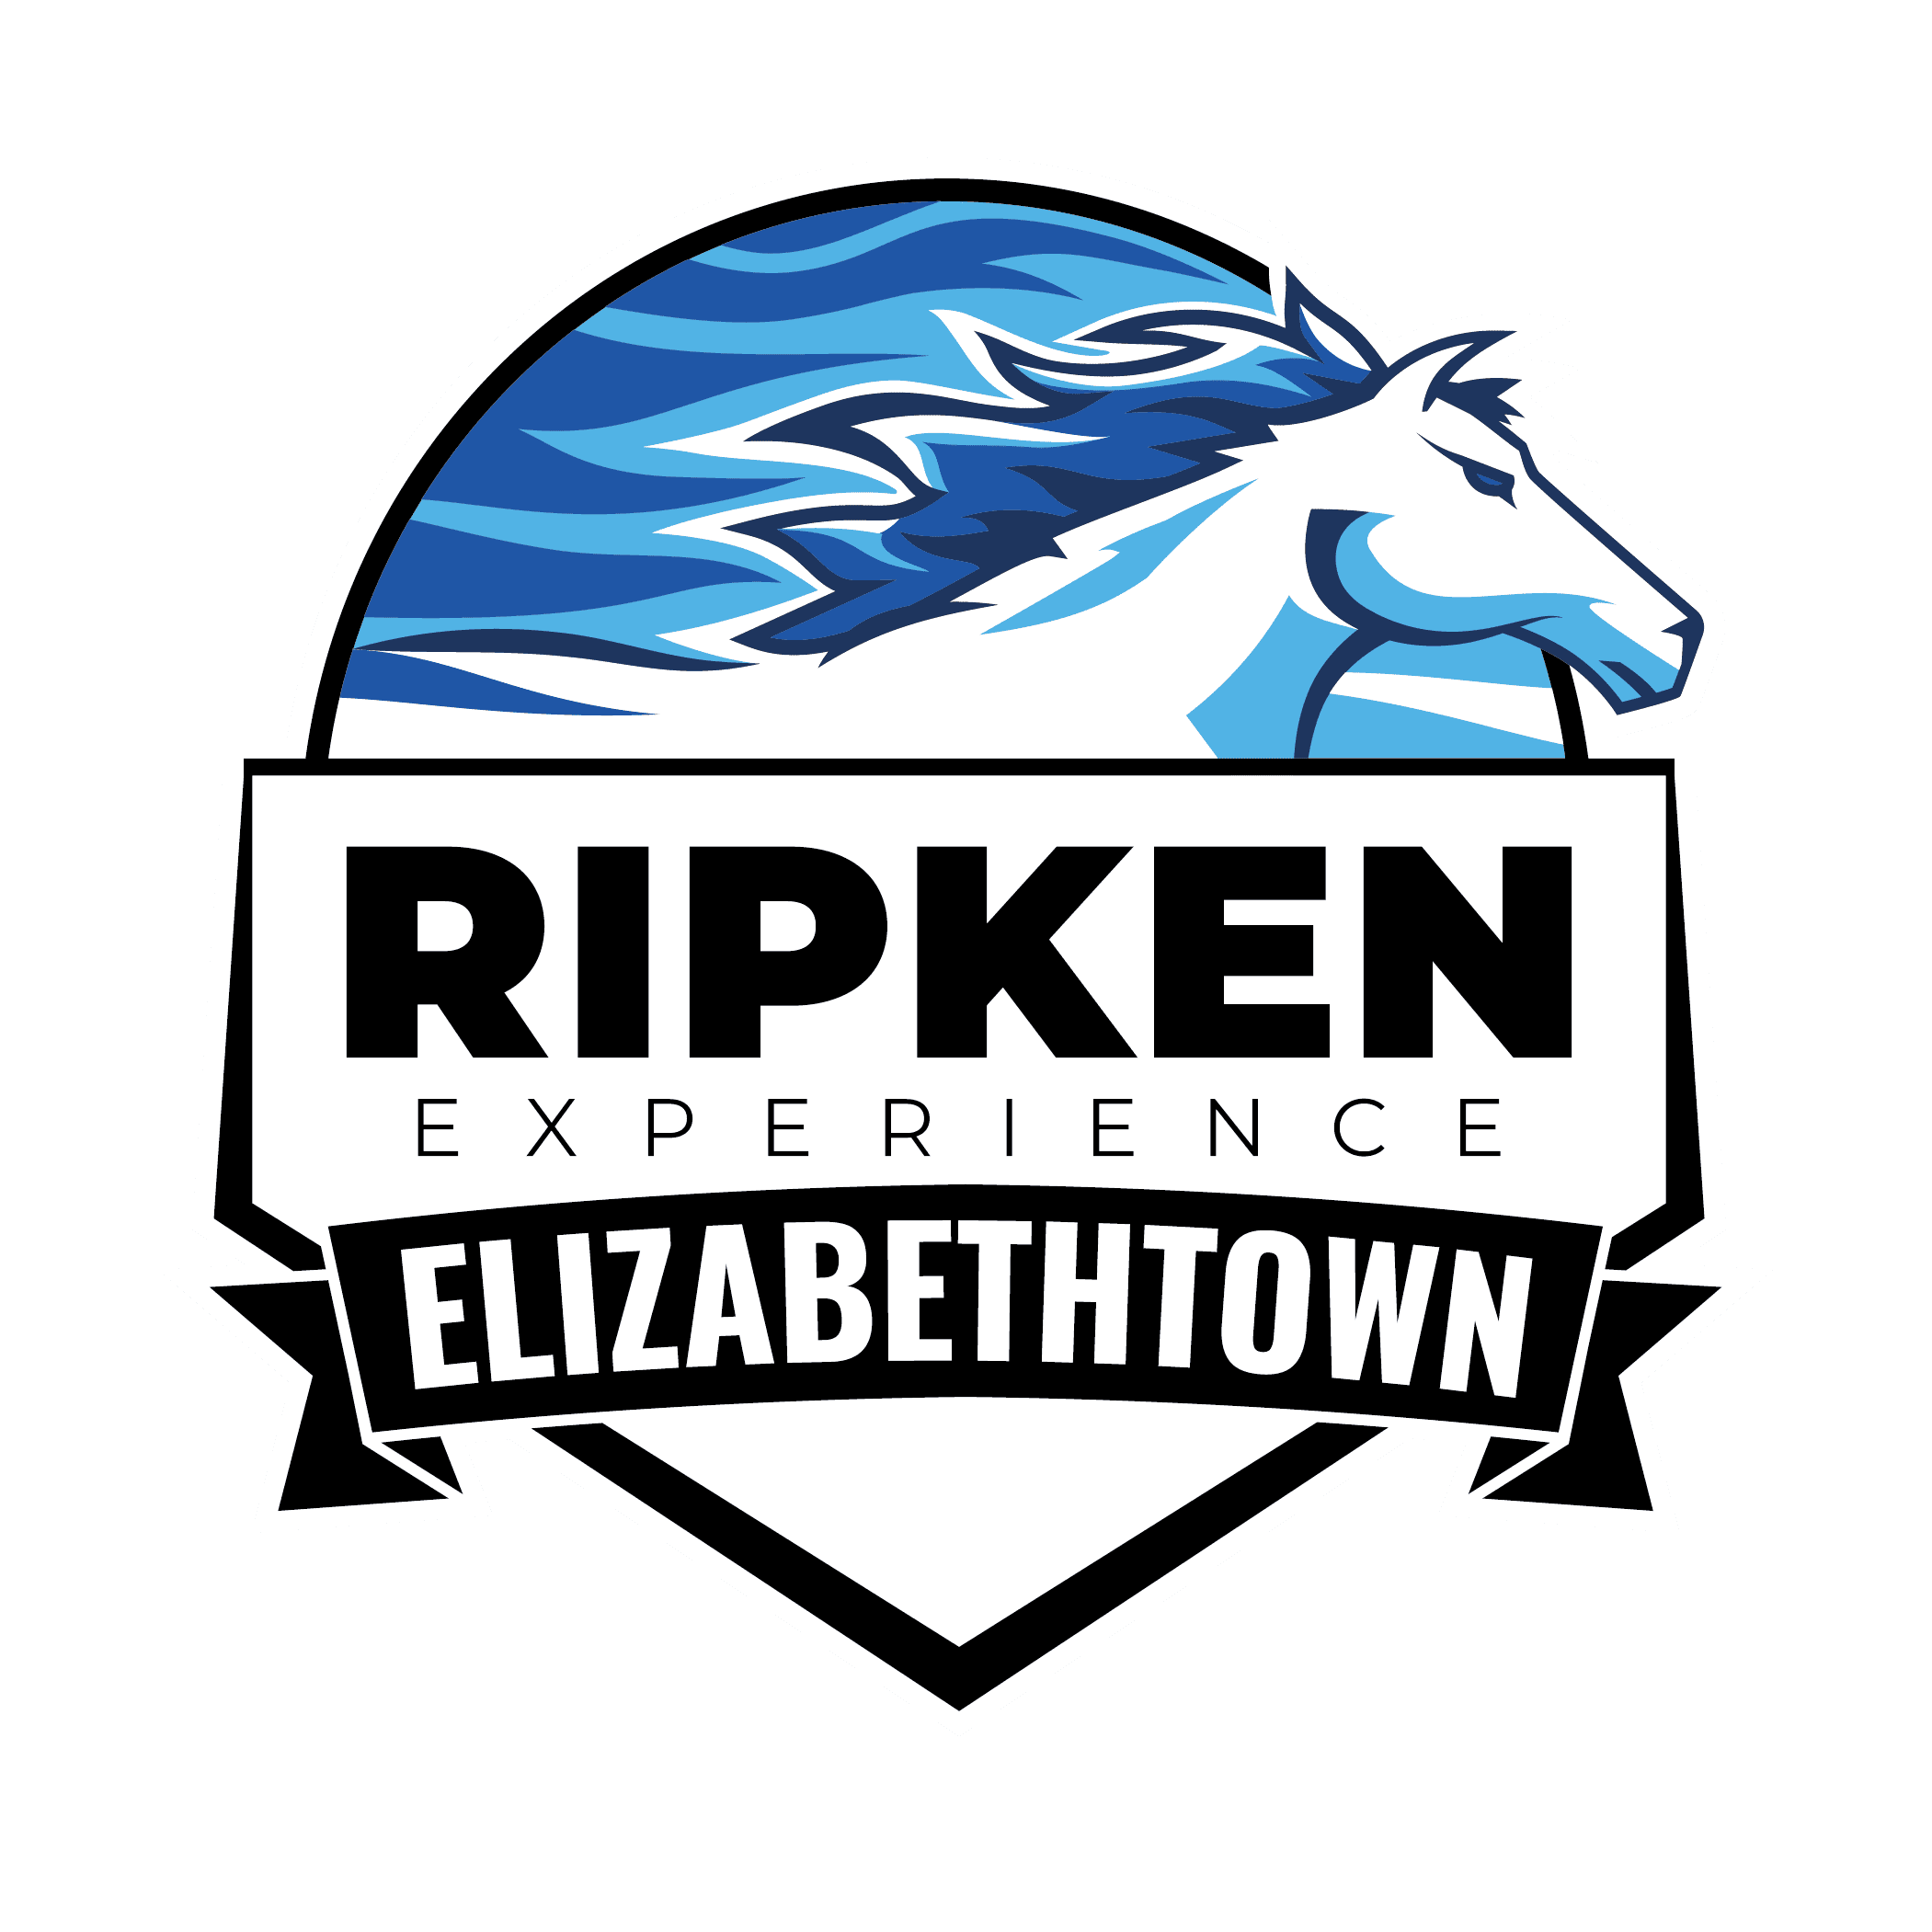 The Ripken Experience Elizabethtown